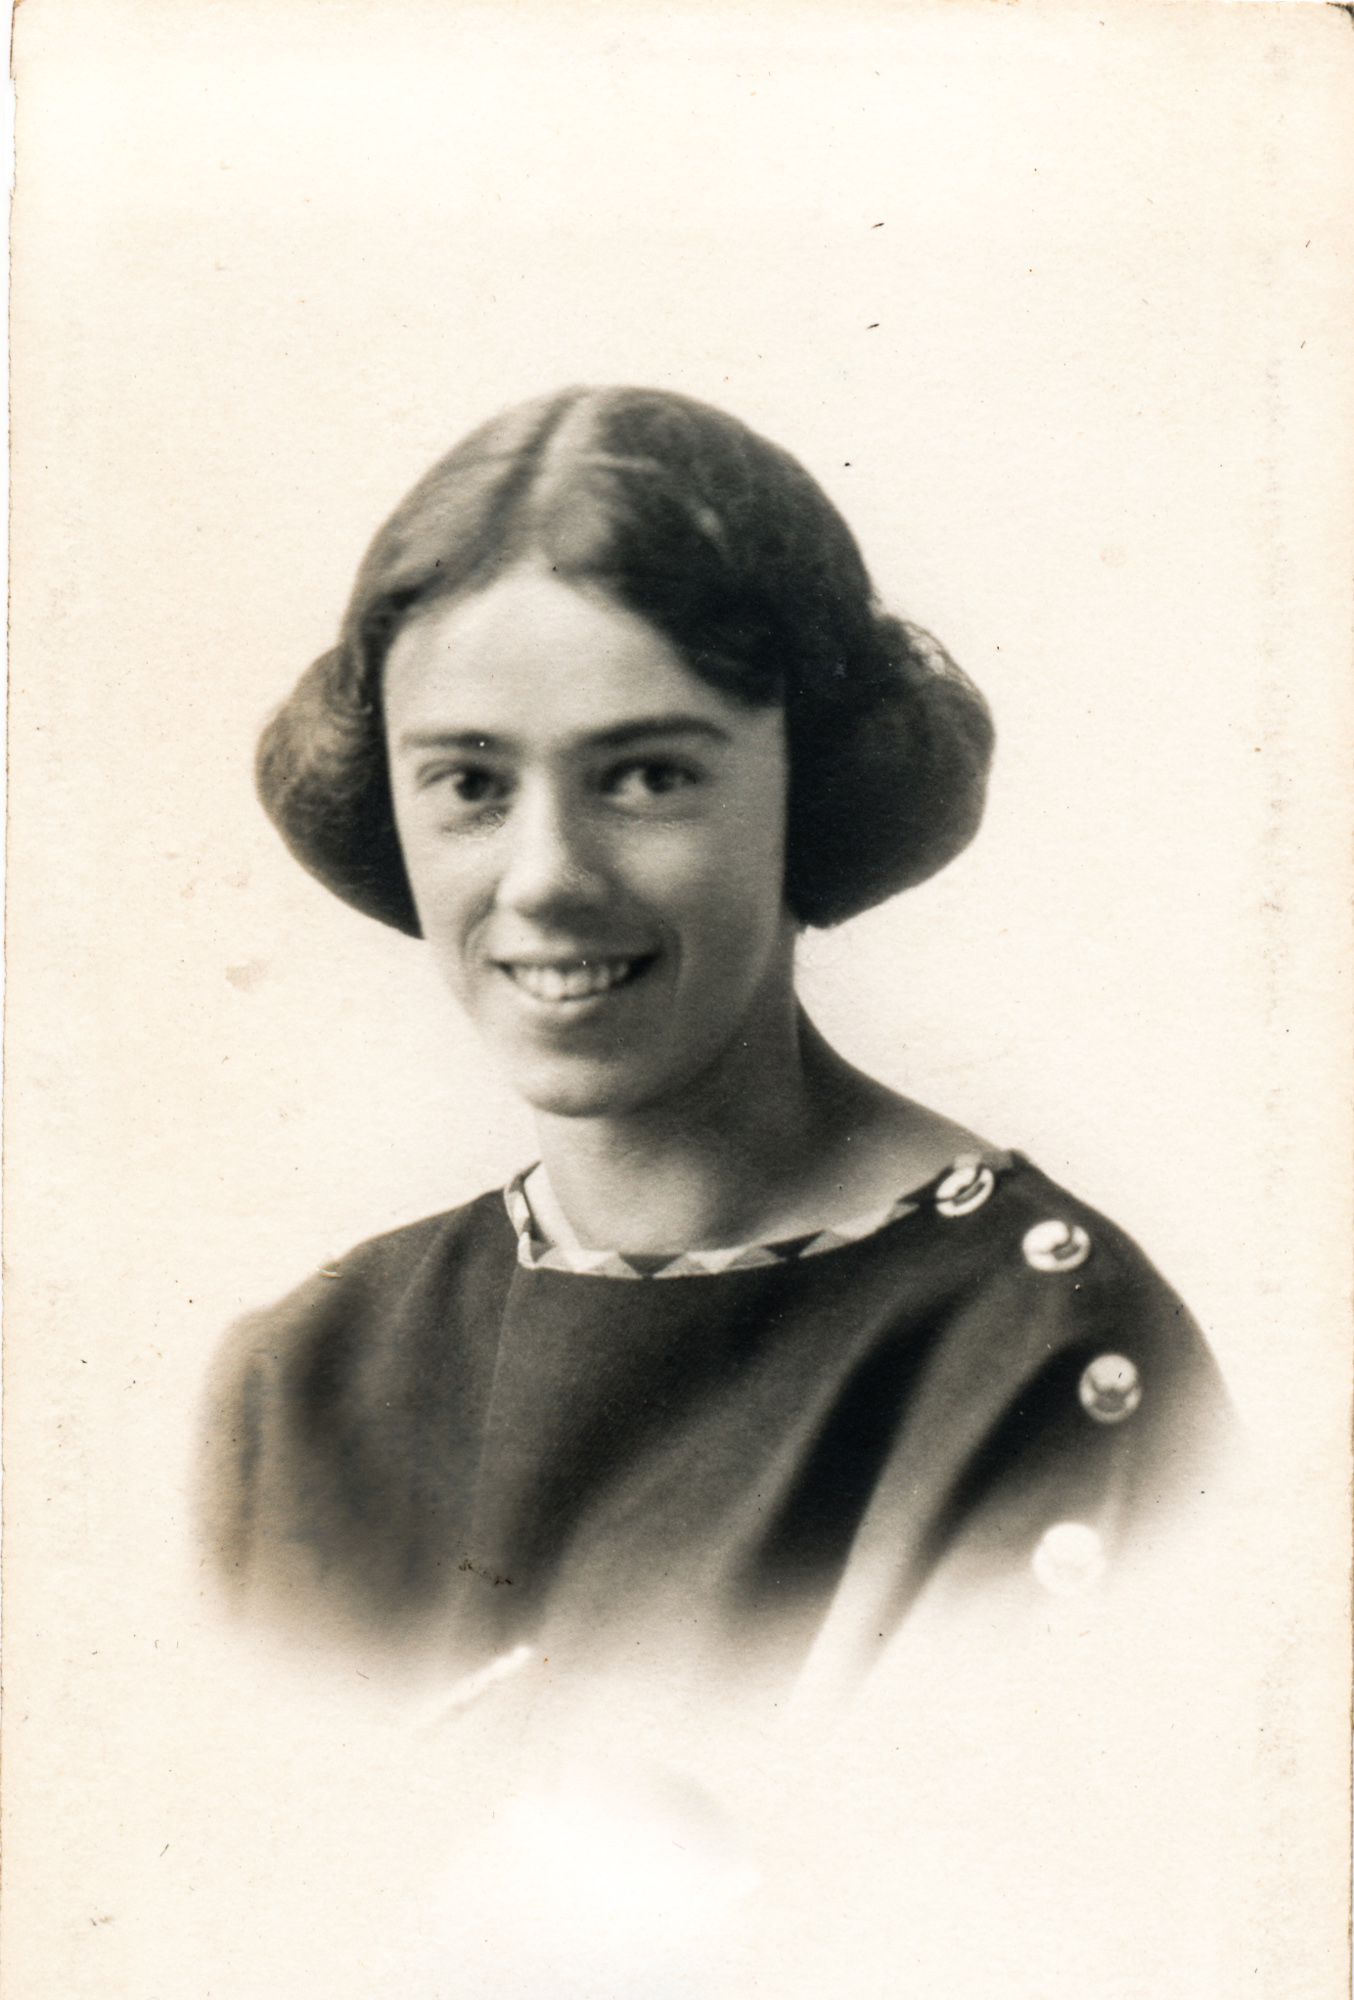 Dauth Family Archive - Circa 1923 - Graduation Photo Of Elizabeth Dauth